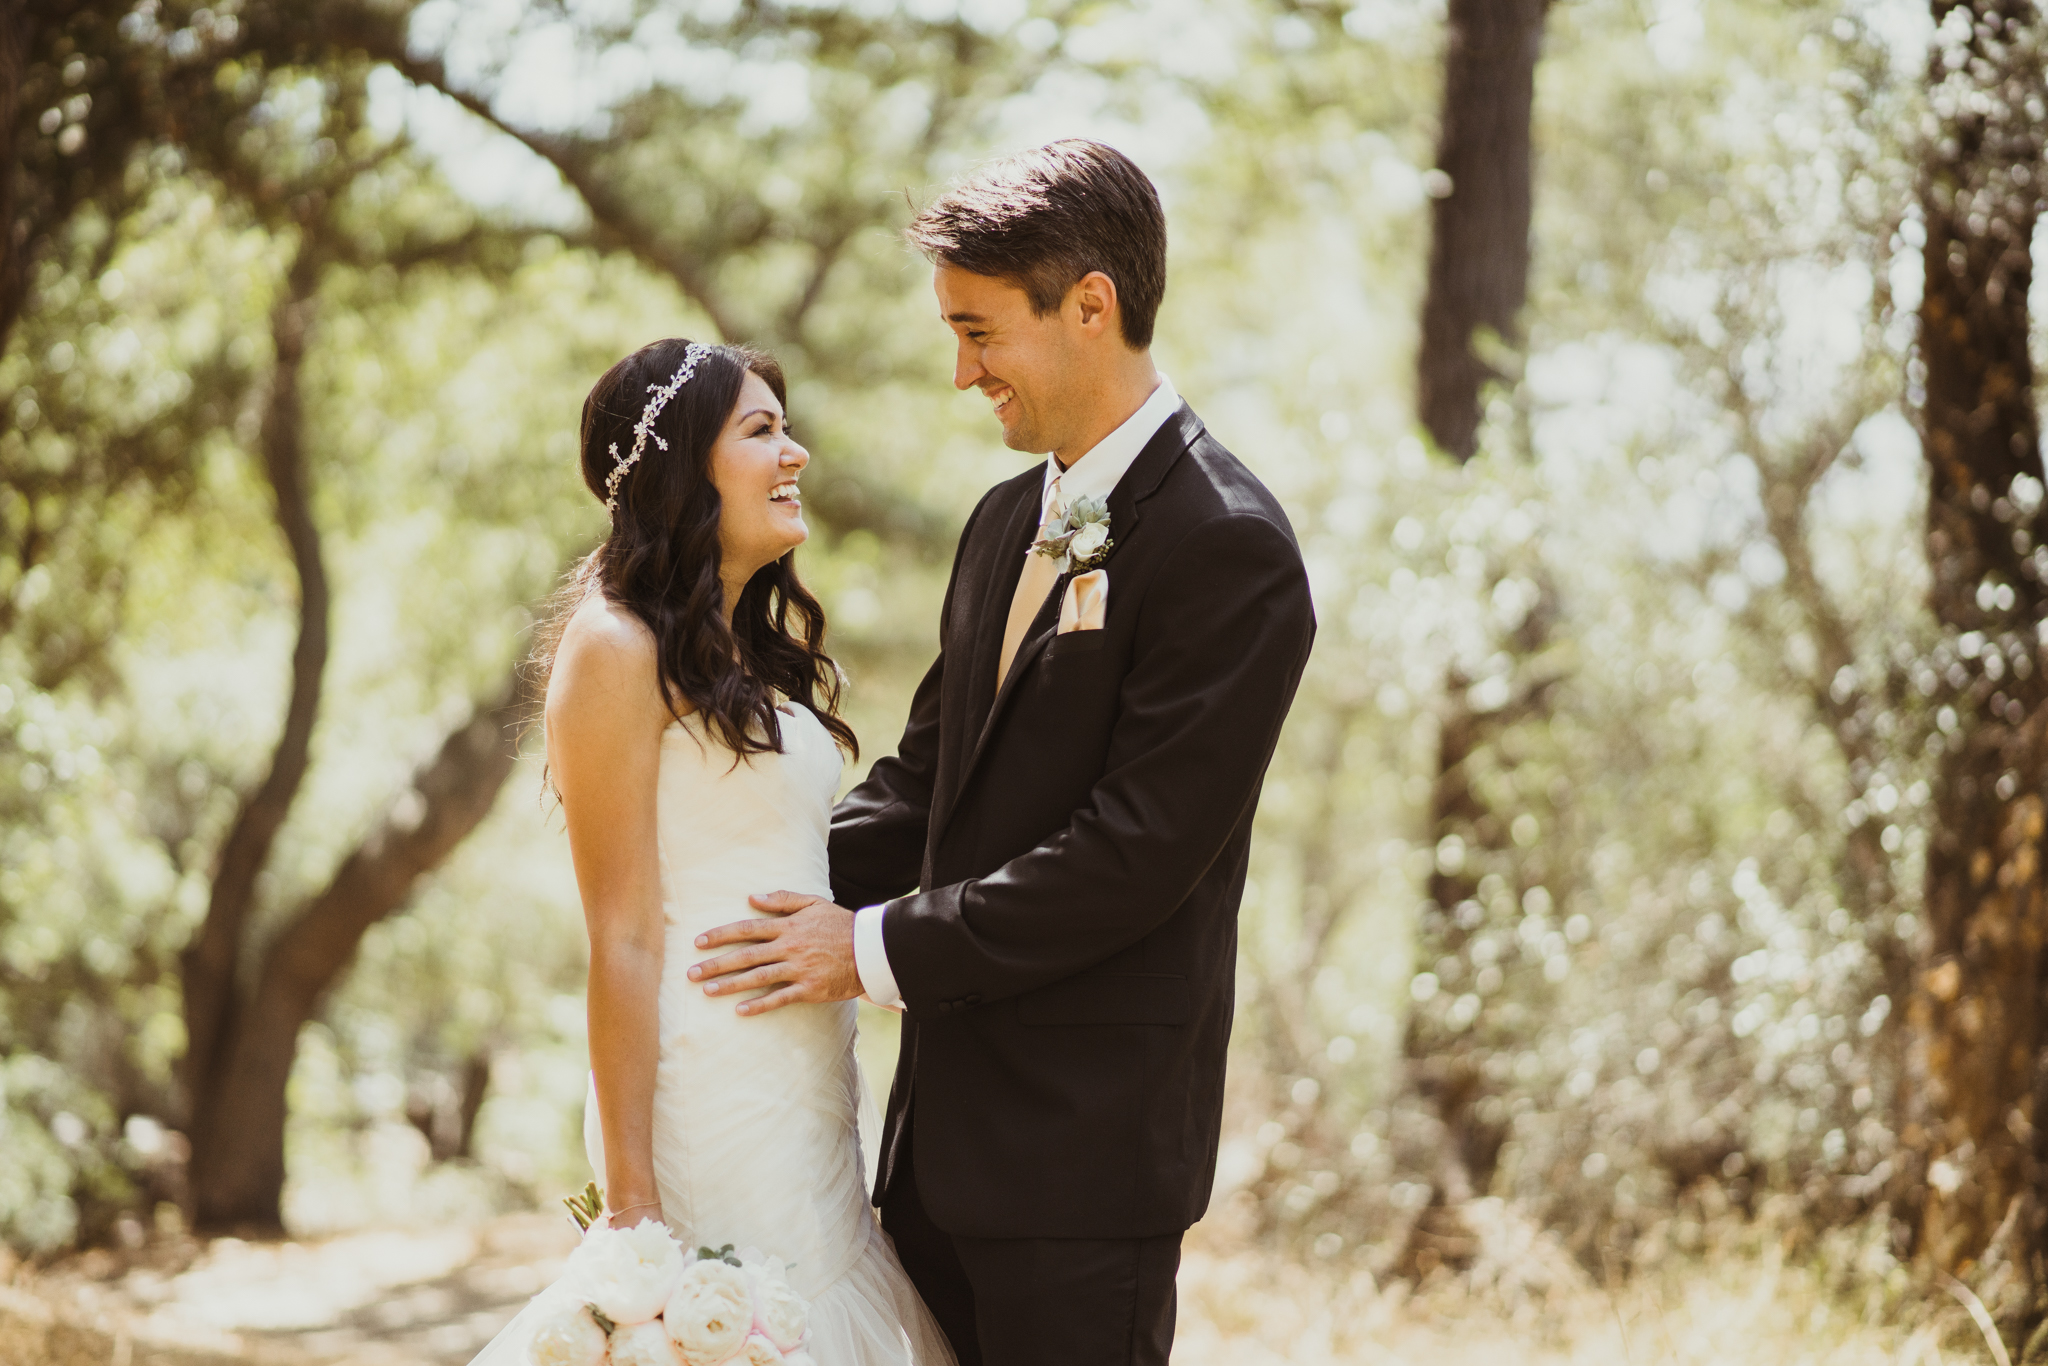 ©Isaiah & Taylor Photography - Inn of the Seventh Ray Wedding, Topanga Canyon California-31.jpg